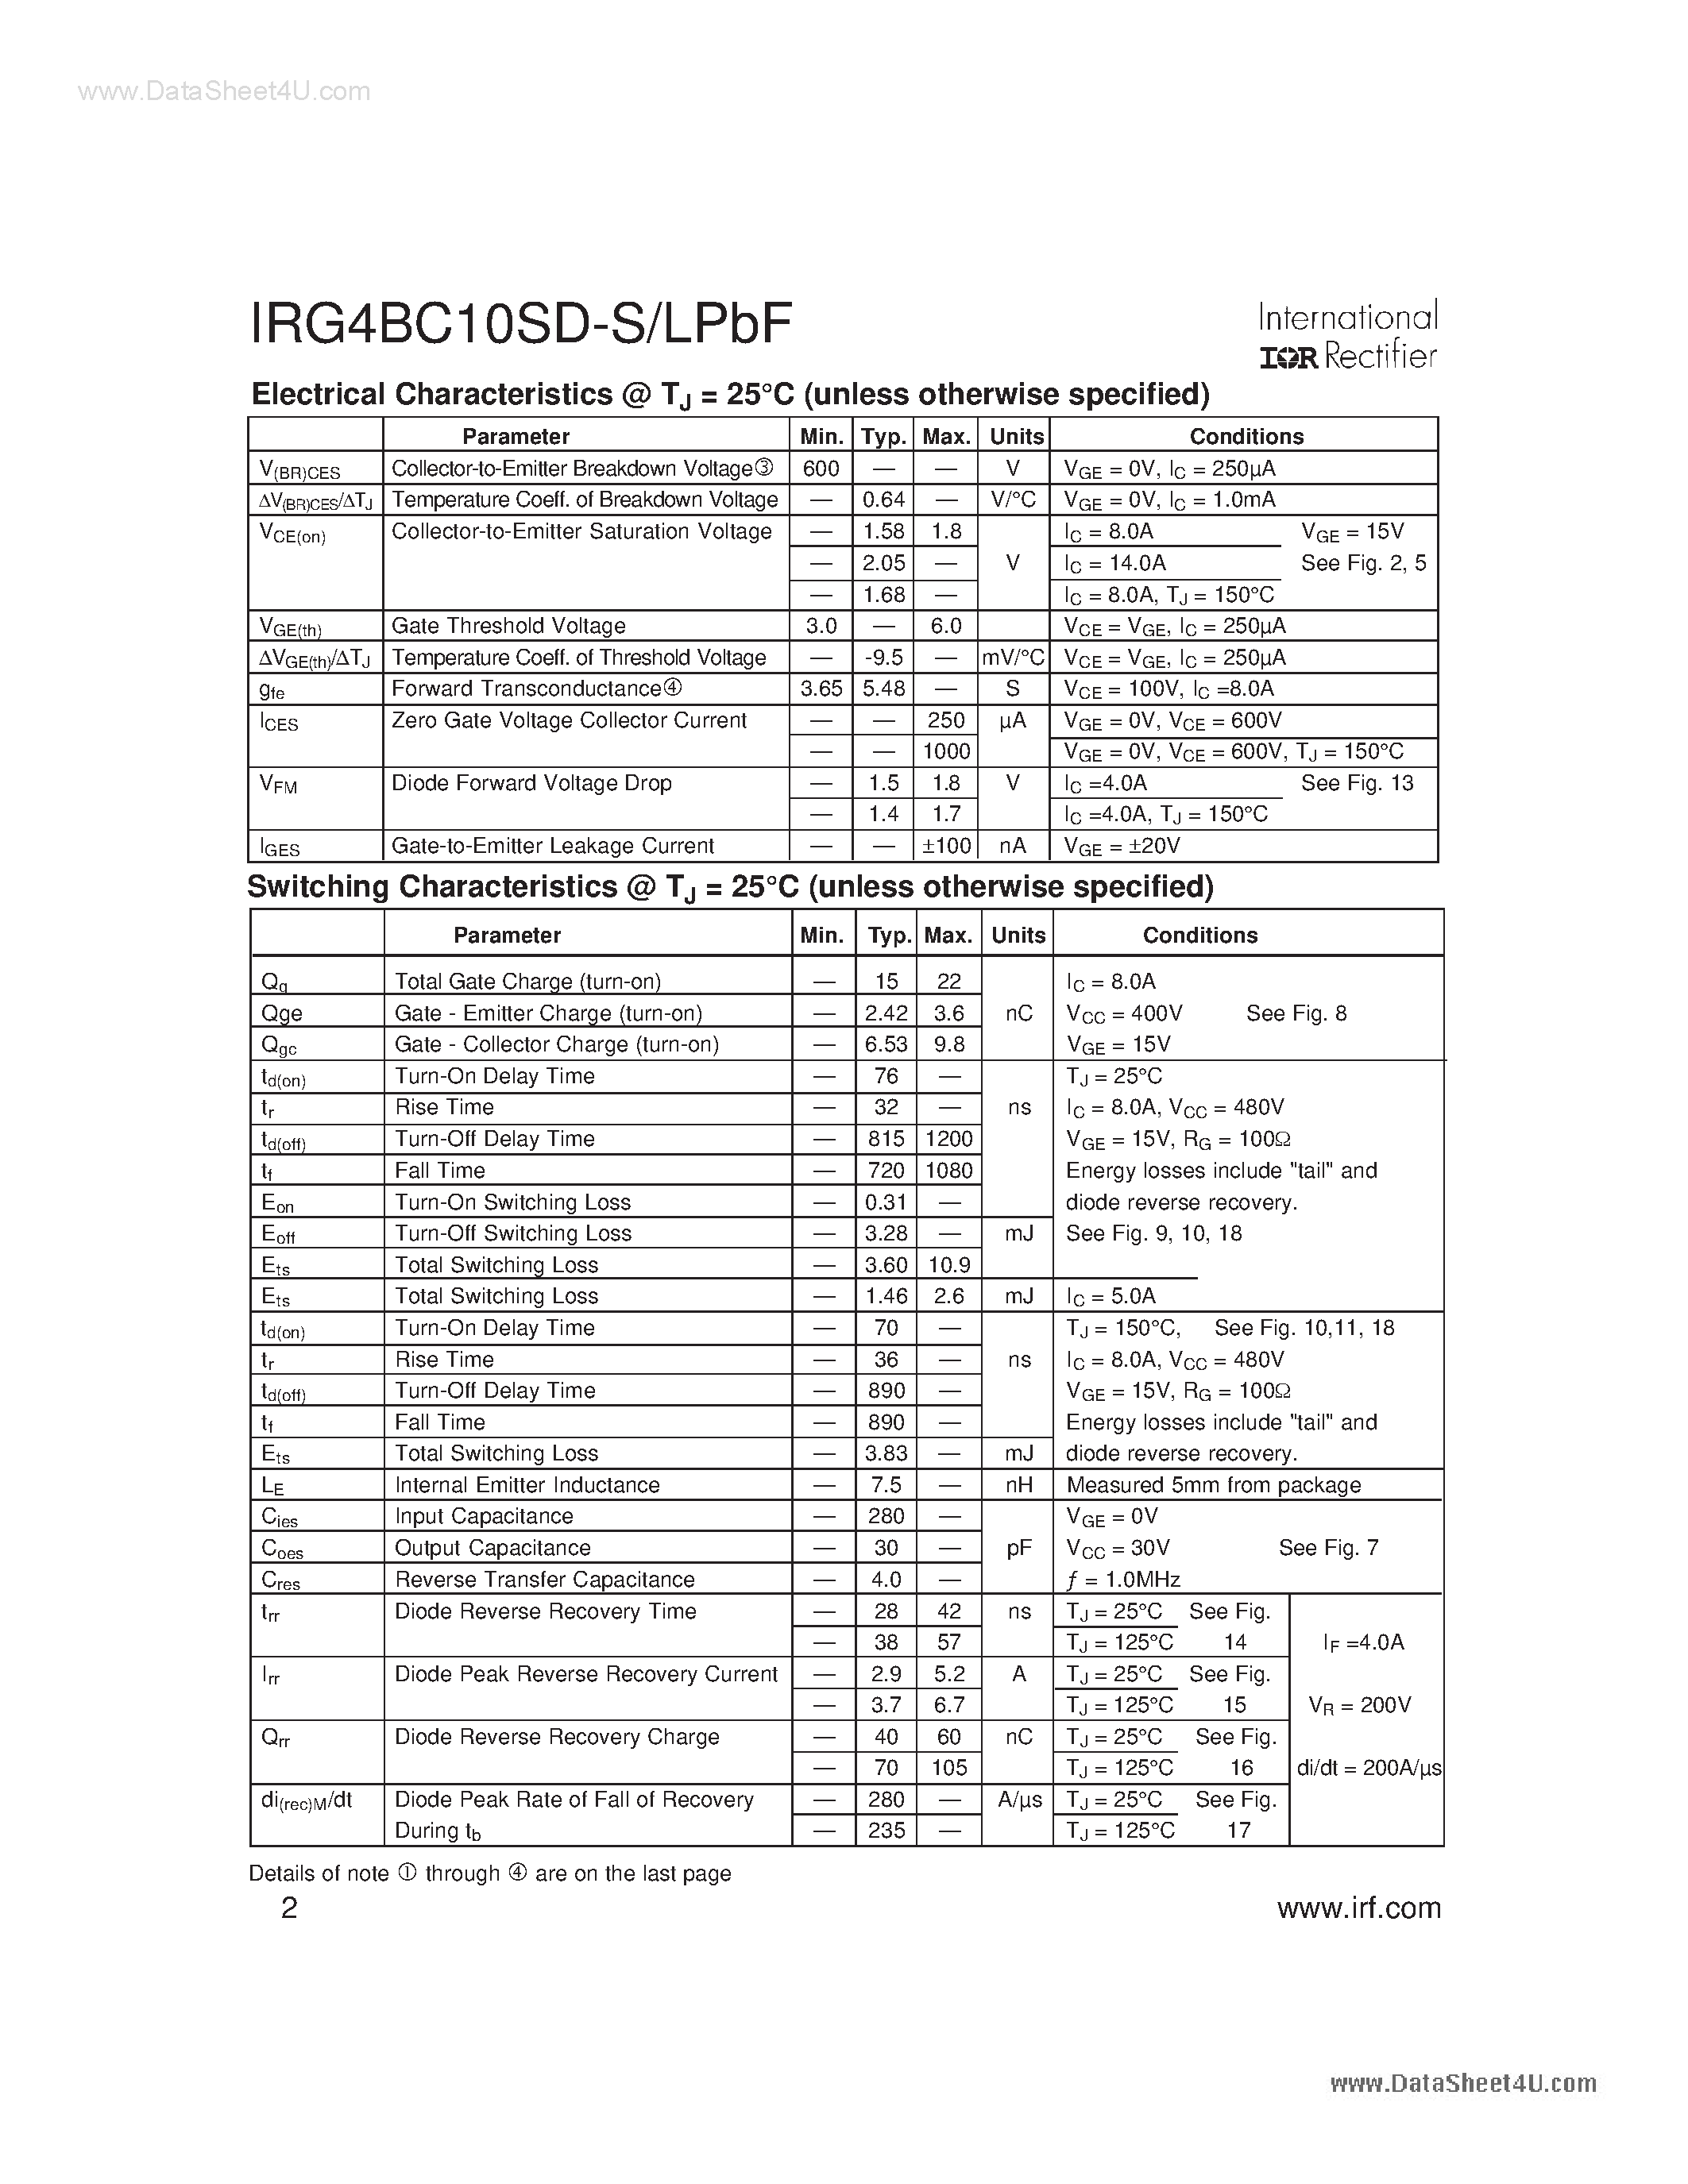 Datasheet IRG4BC10SD-LPBF - INSULATED GATE BIPOLAR TRANSISTOR page 2